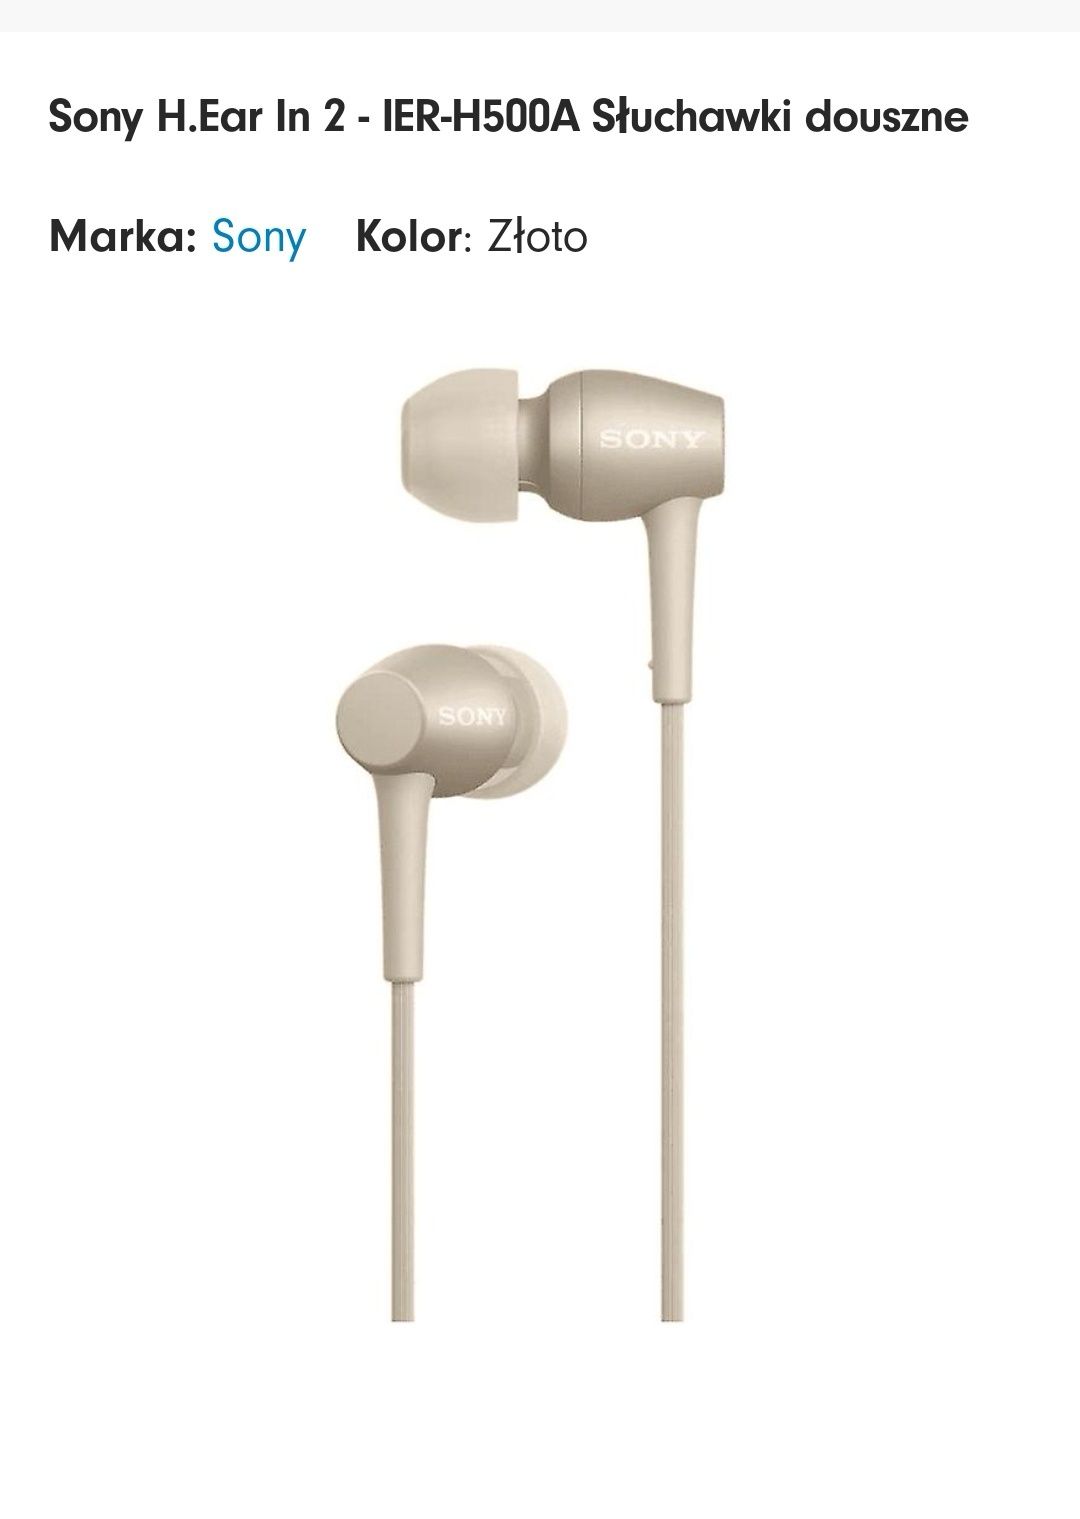 Słuchawki douszne Sony IER-H500A h.ear in 2